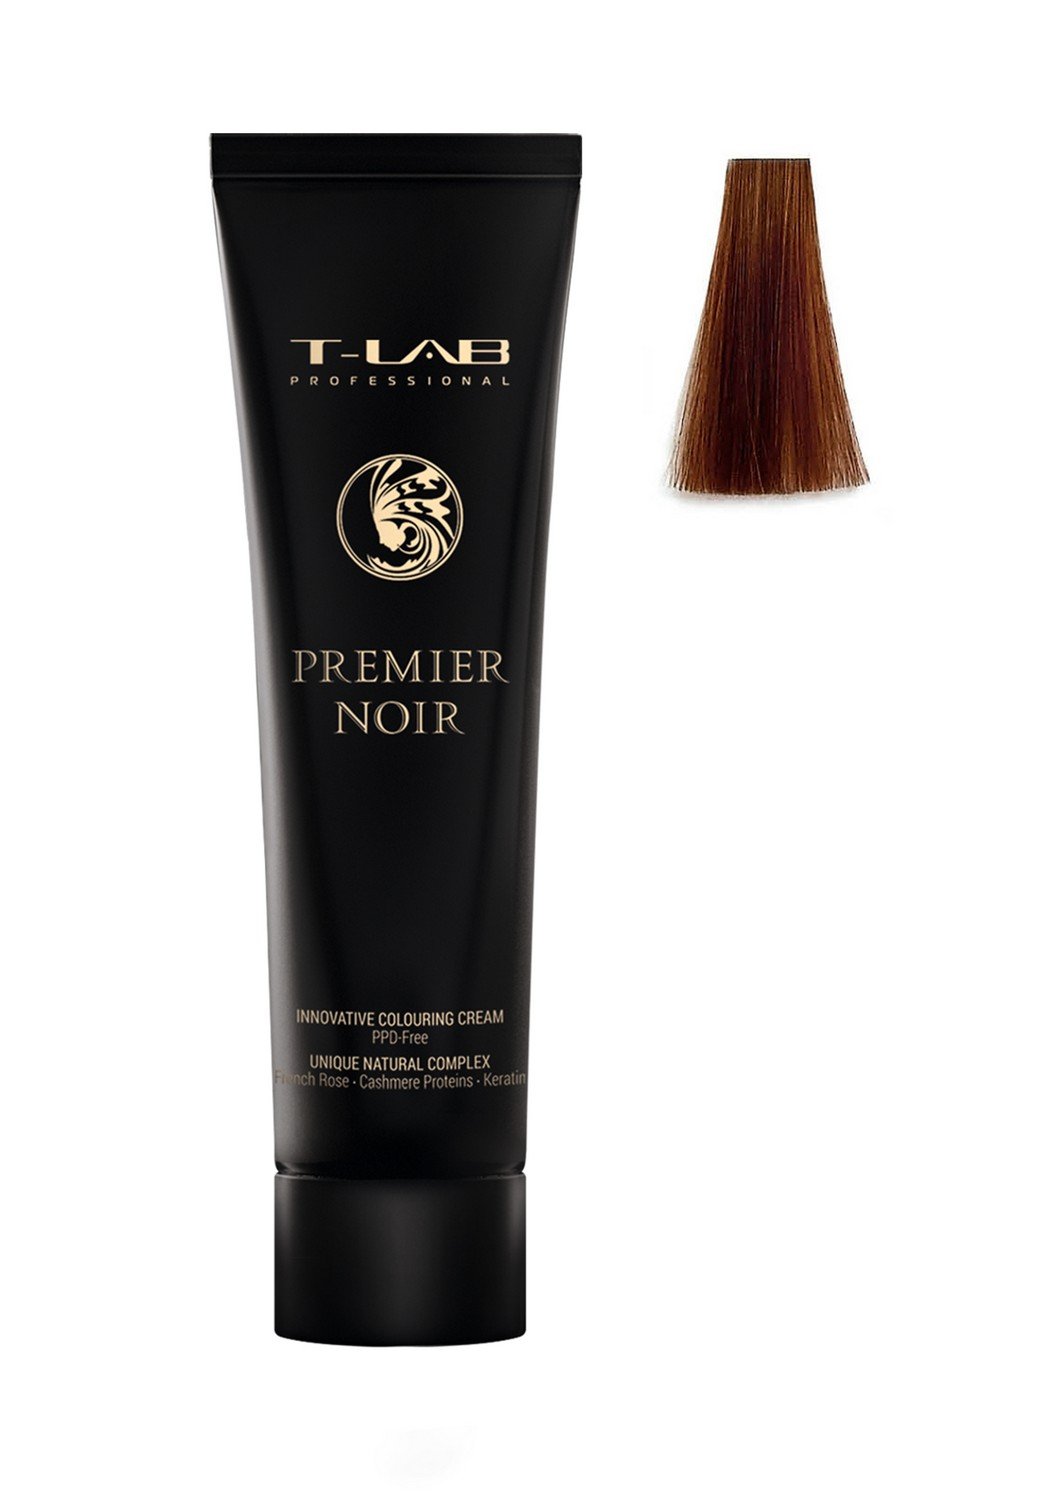 Крем-краска T-LAB Professional Premier Noir colouring cream, оттенок 7.3 (golden blonde) - фото 2